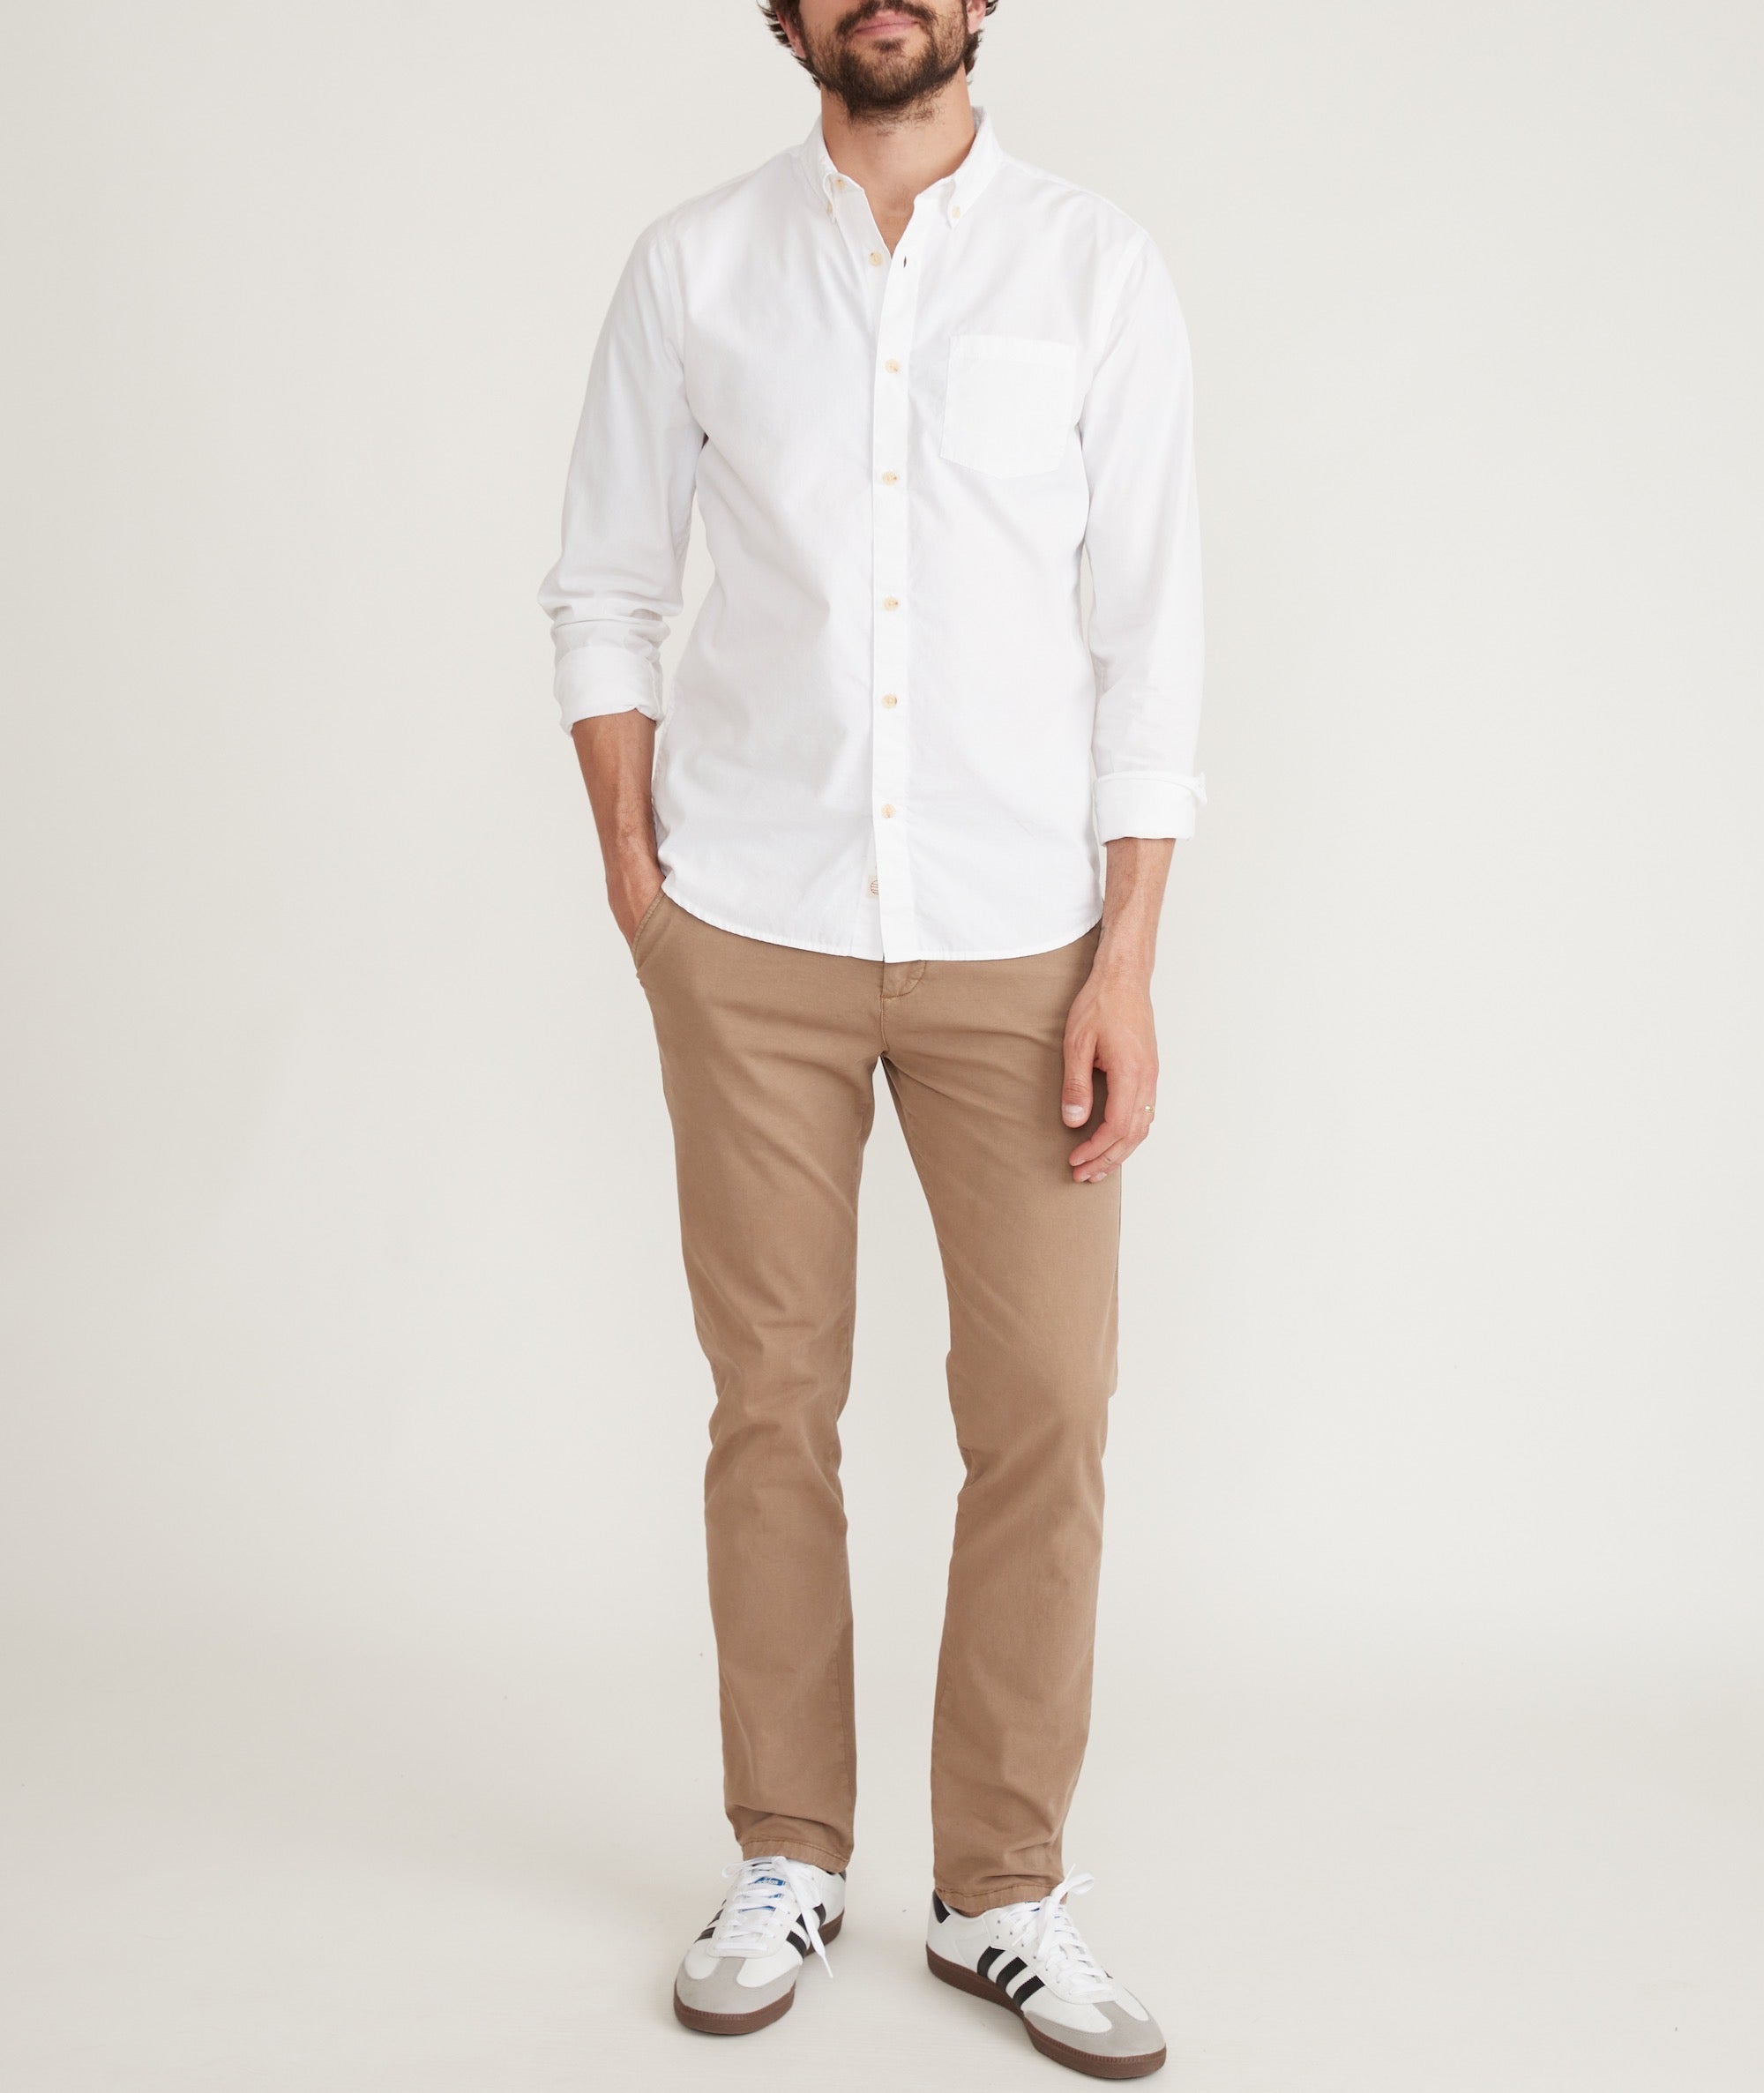 Men's White Chinos & Khaki Pants | Nordstrom